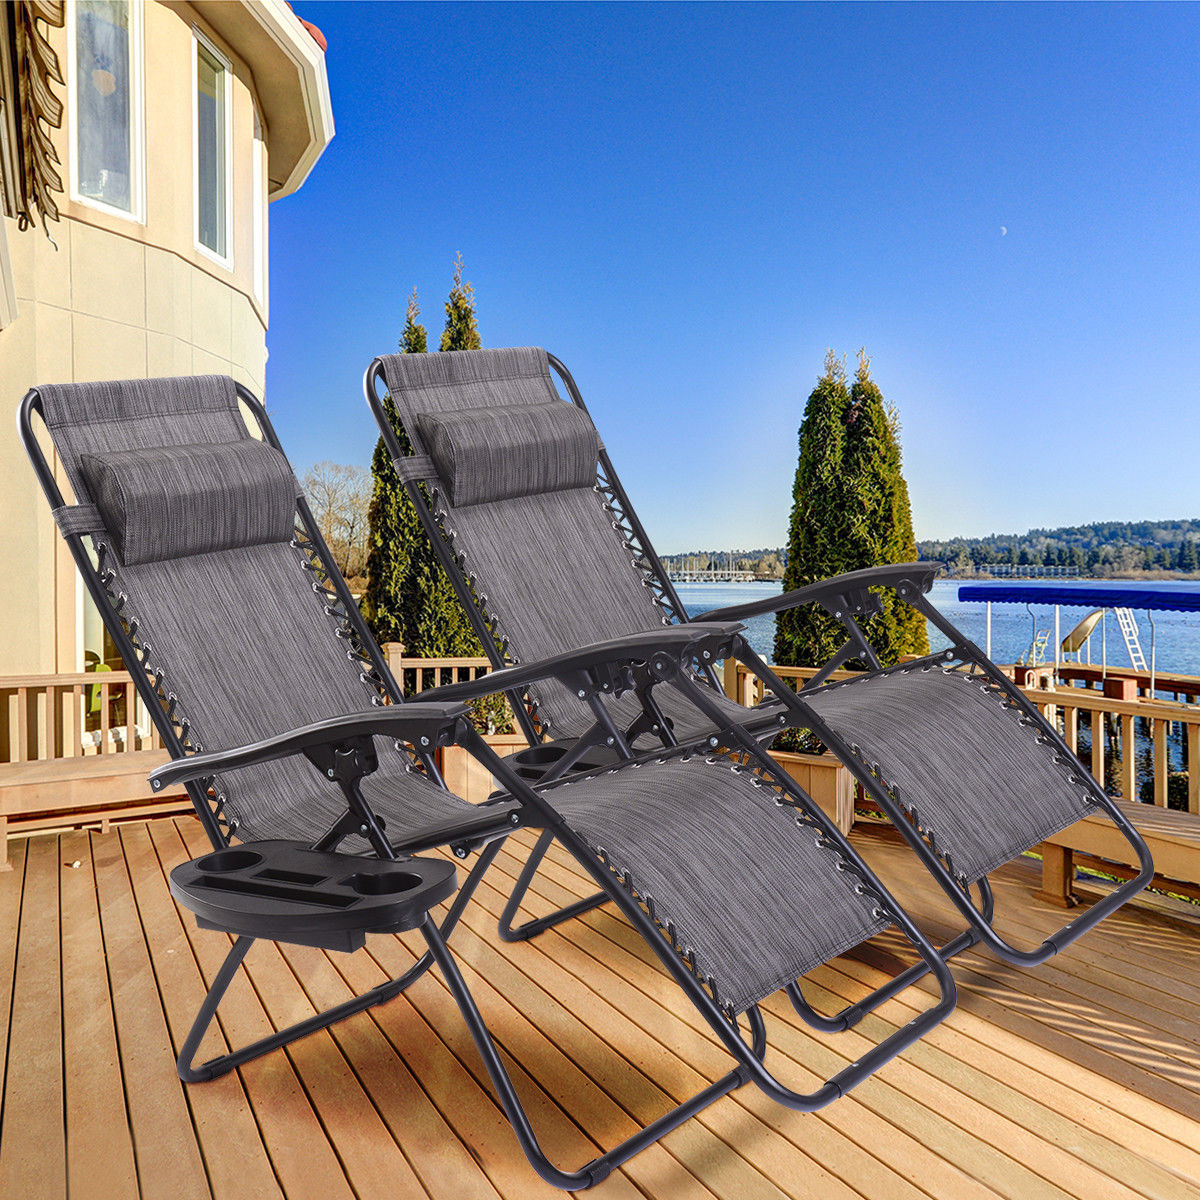 Costway 2PC Folding Zero Gravity Reclining Lounge Chairs Beach Patio W/Utility Tray